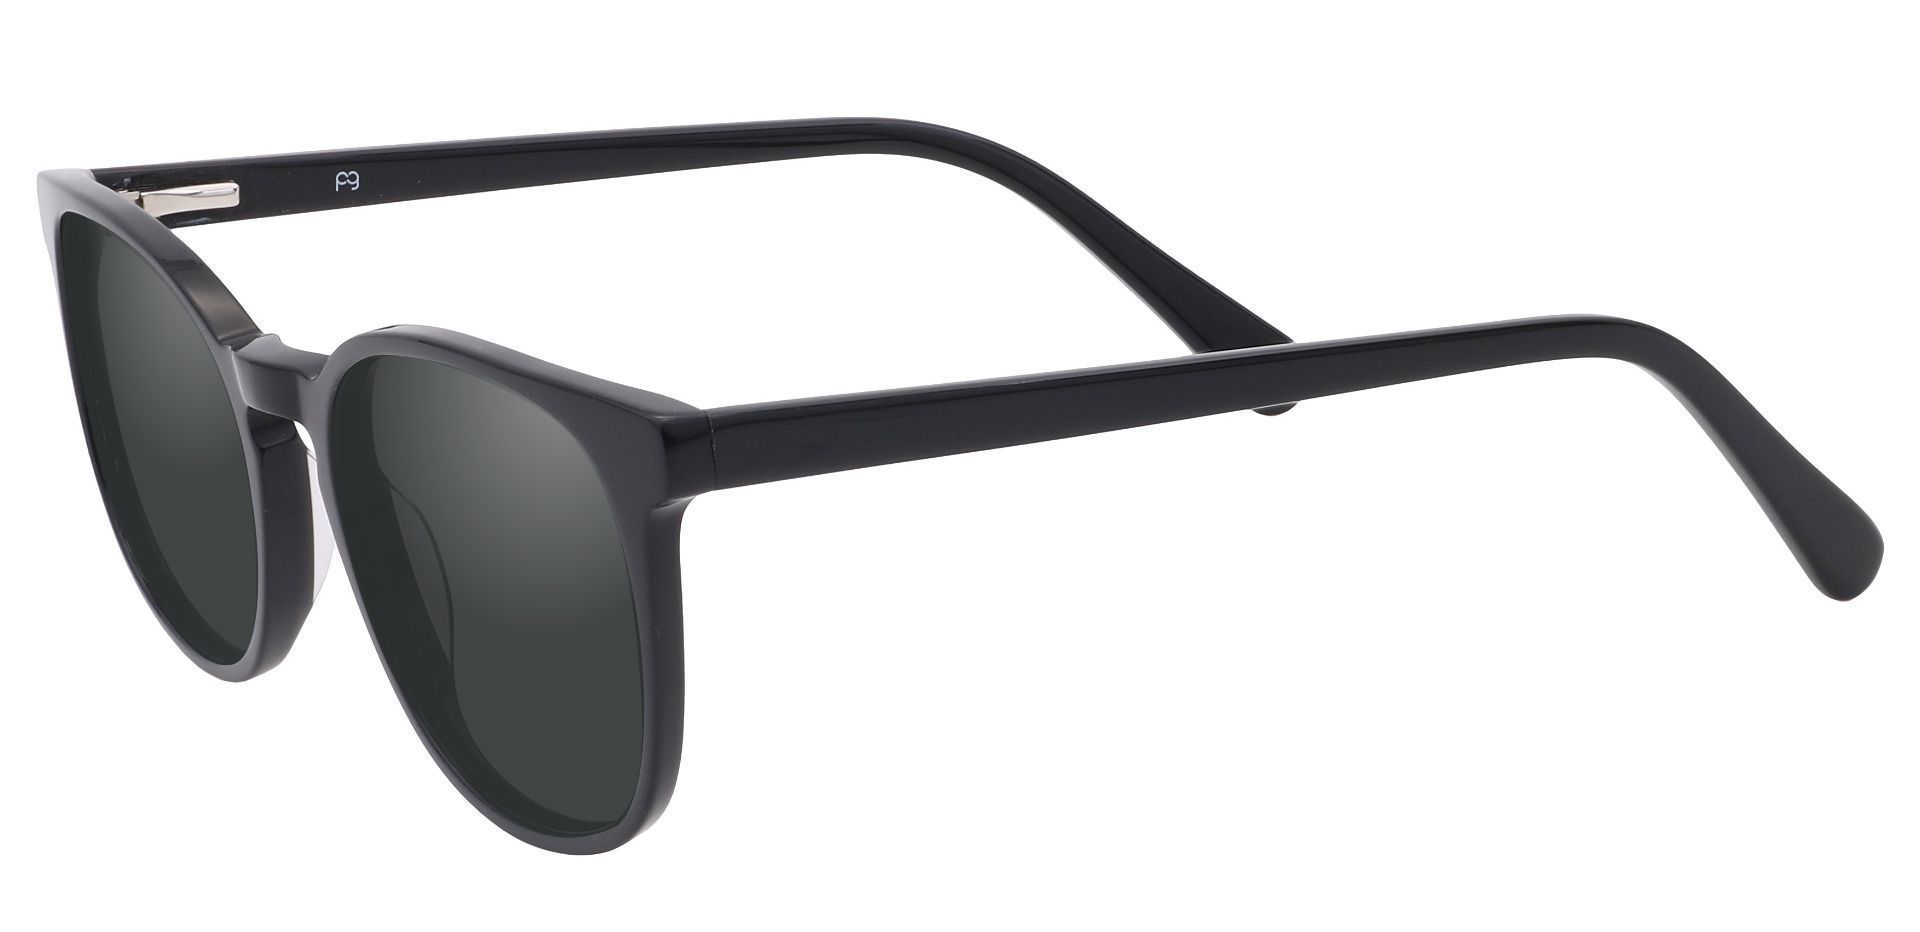 Nebula Round Lined Bifocal Sunglasses - Black Frame With Gray Lenses